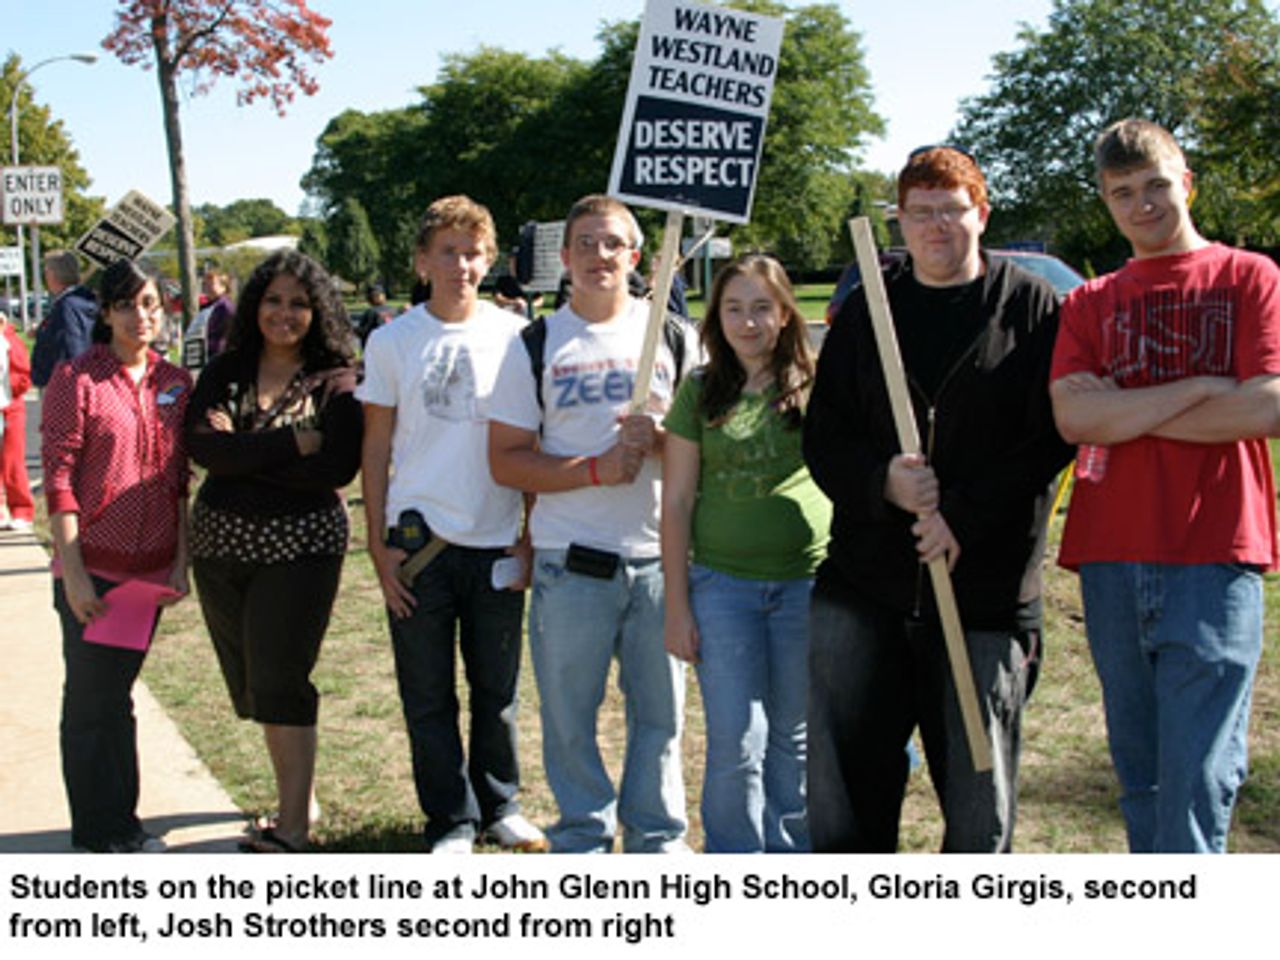 Students on the picket line at John Glenn High School